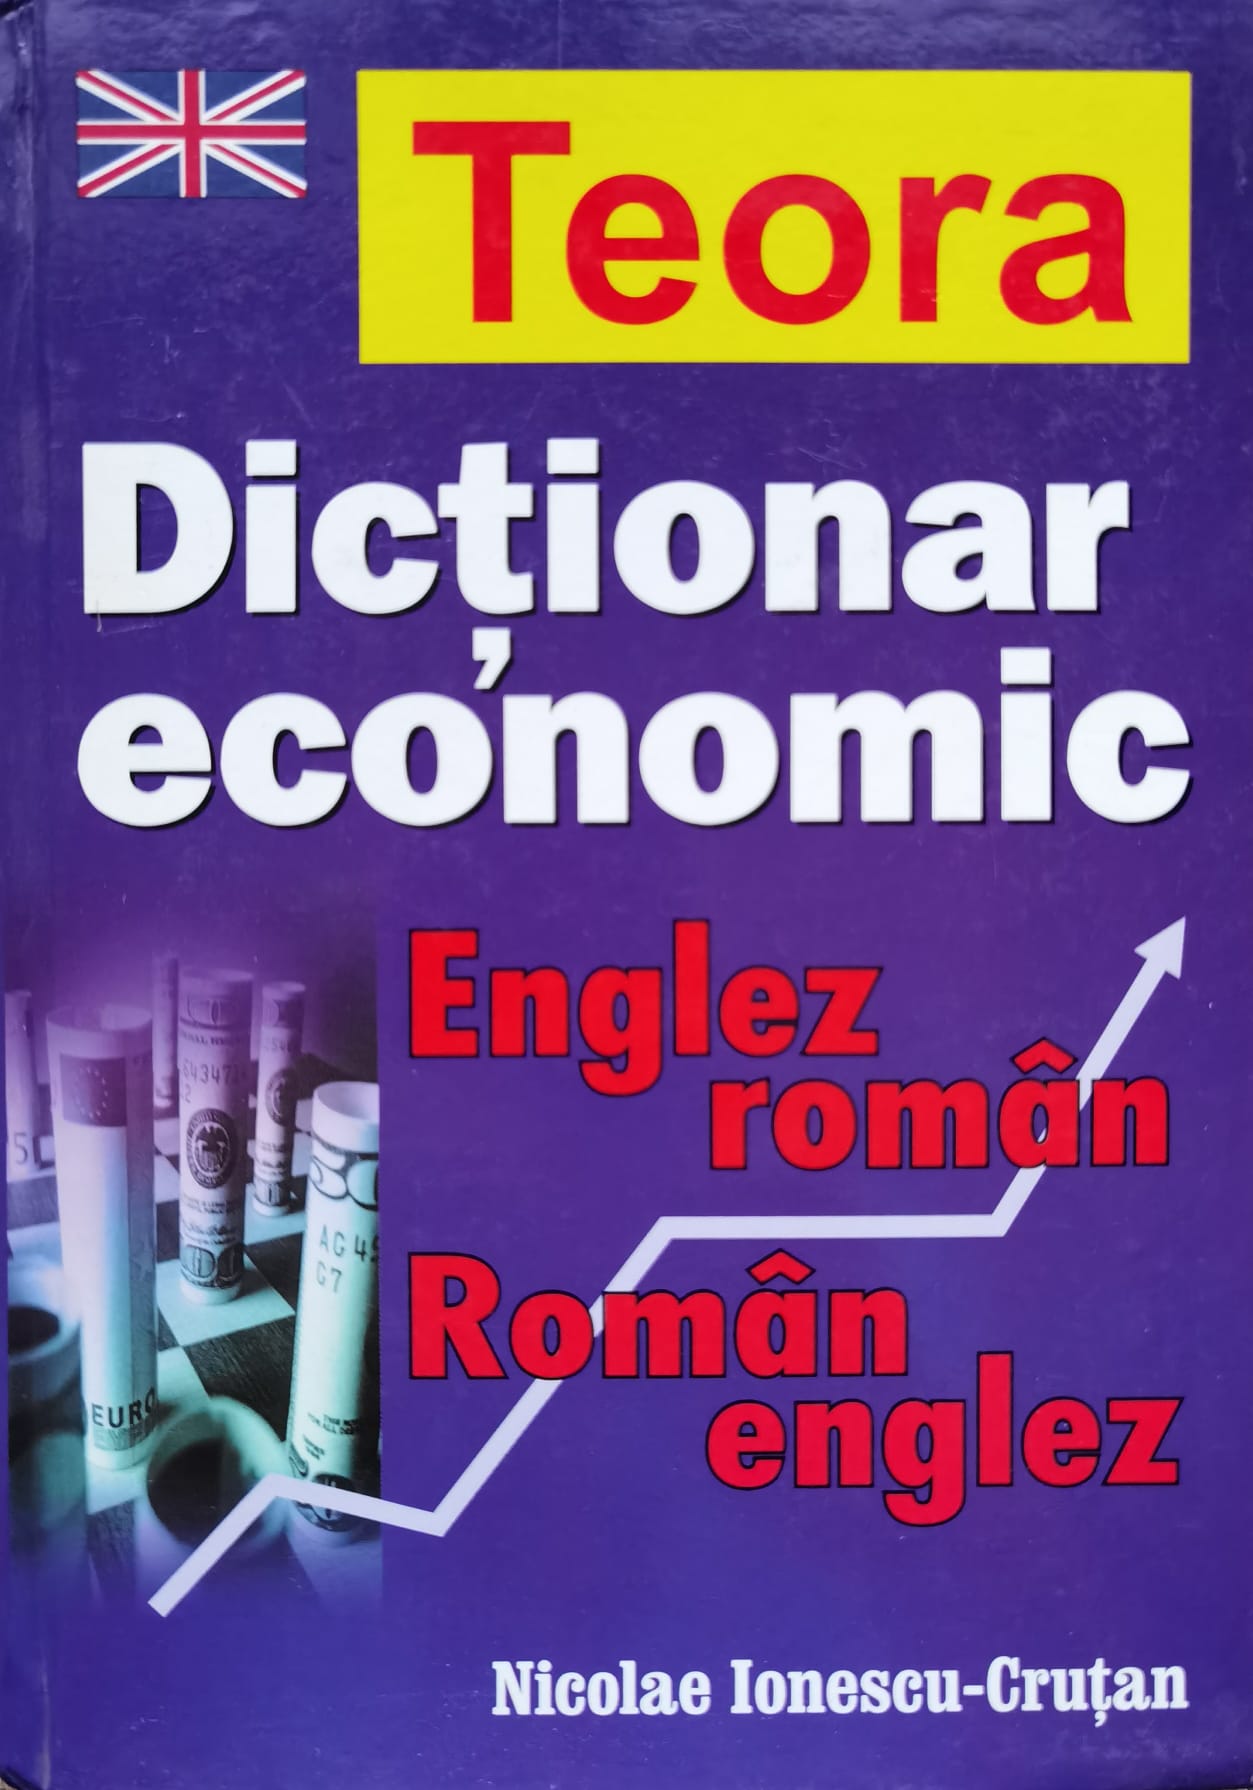 dictionar economic englez-roman roman-englez                                                         nicolae ionescu-crutan                                                                              